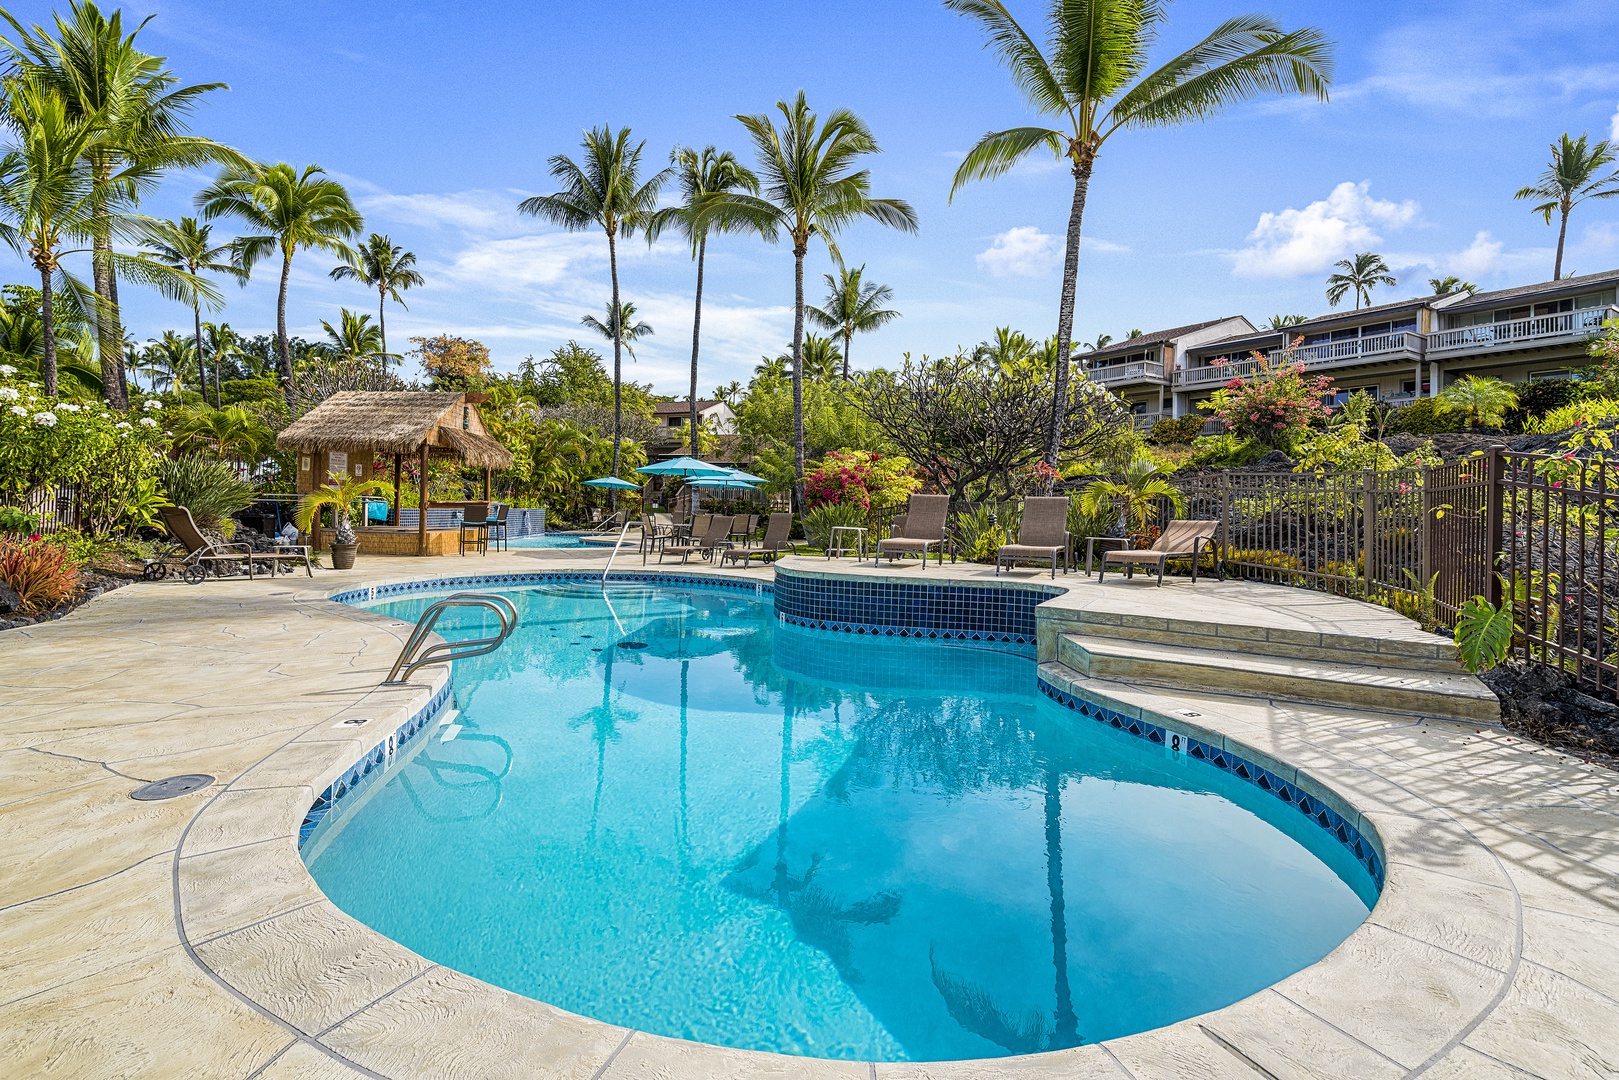 Kailua Kona Vacation Rentals, Keauhou Resort 113 - Beautiful pool area at Keauhou Resort